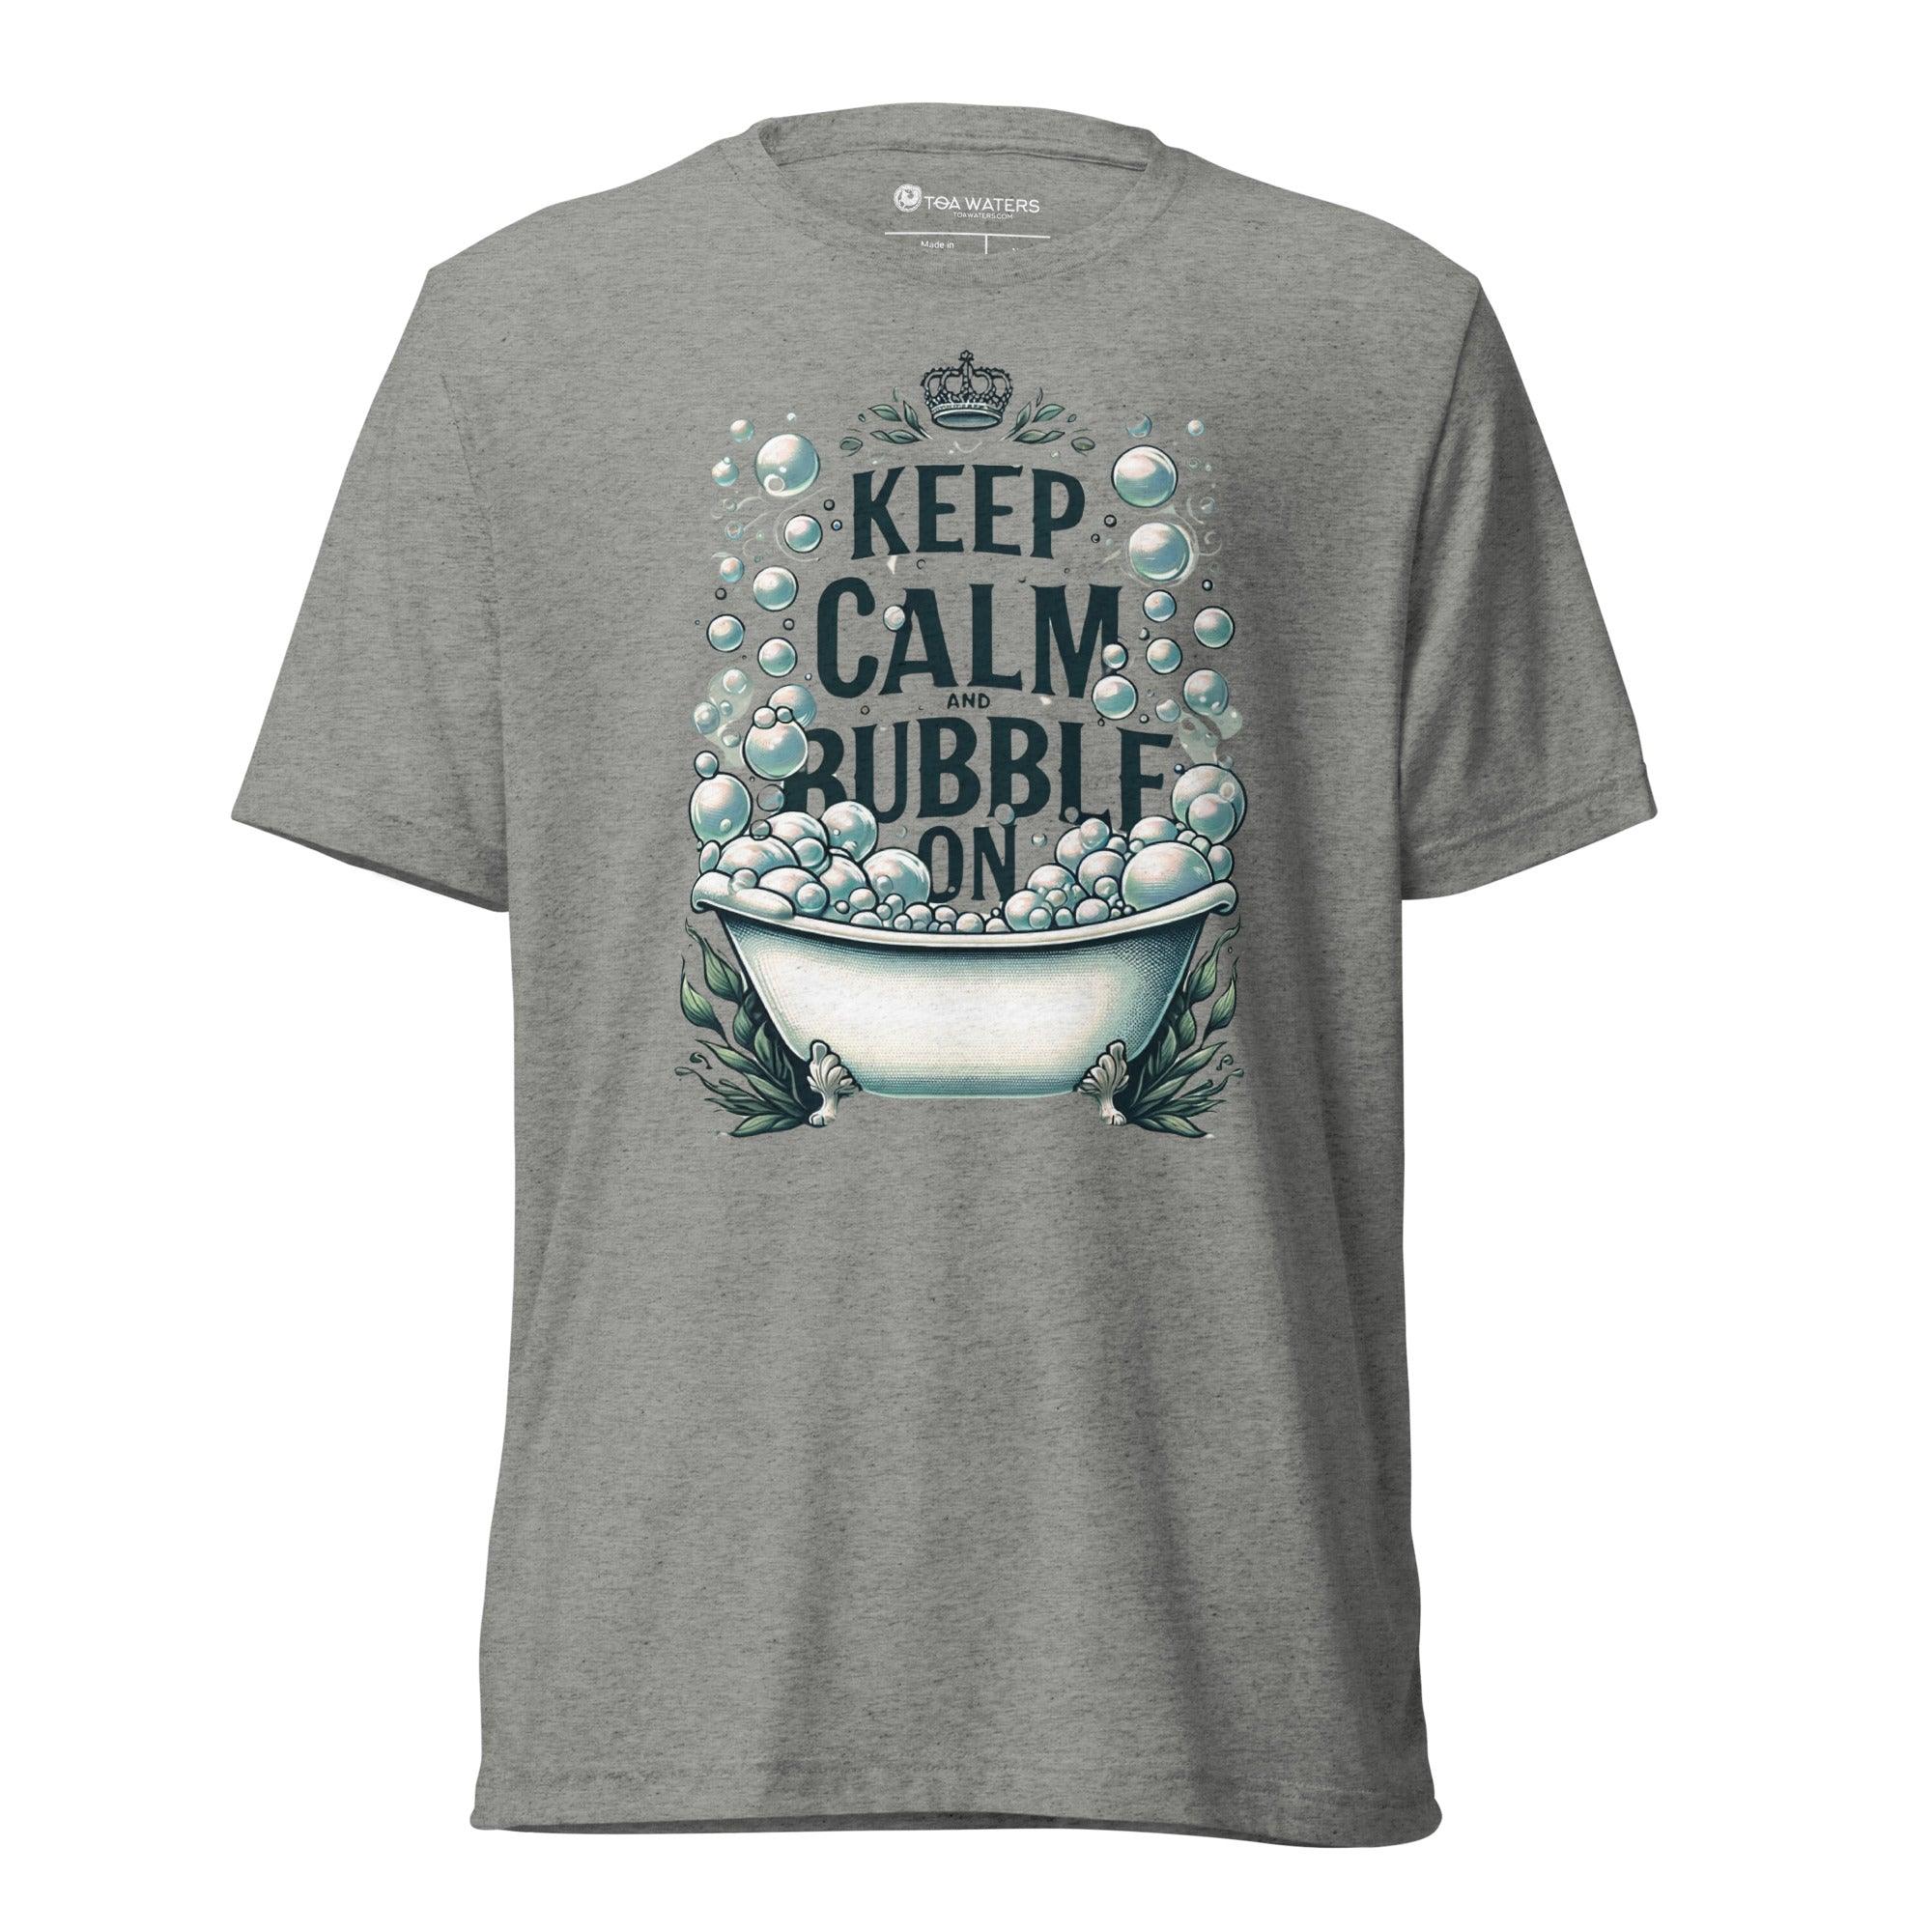 Keep Calm Short sleeve t-shirt - TOA Waters